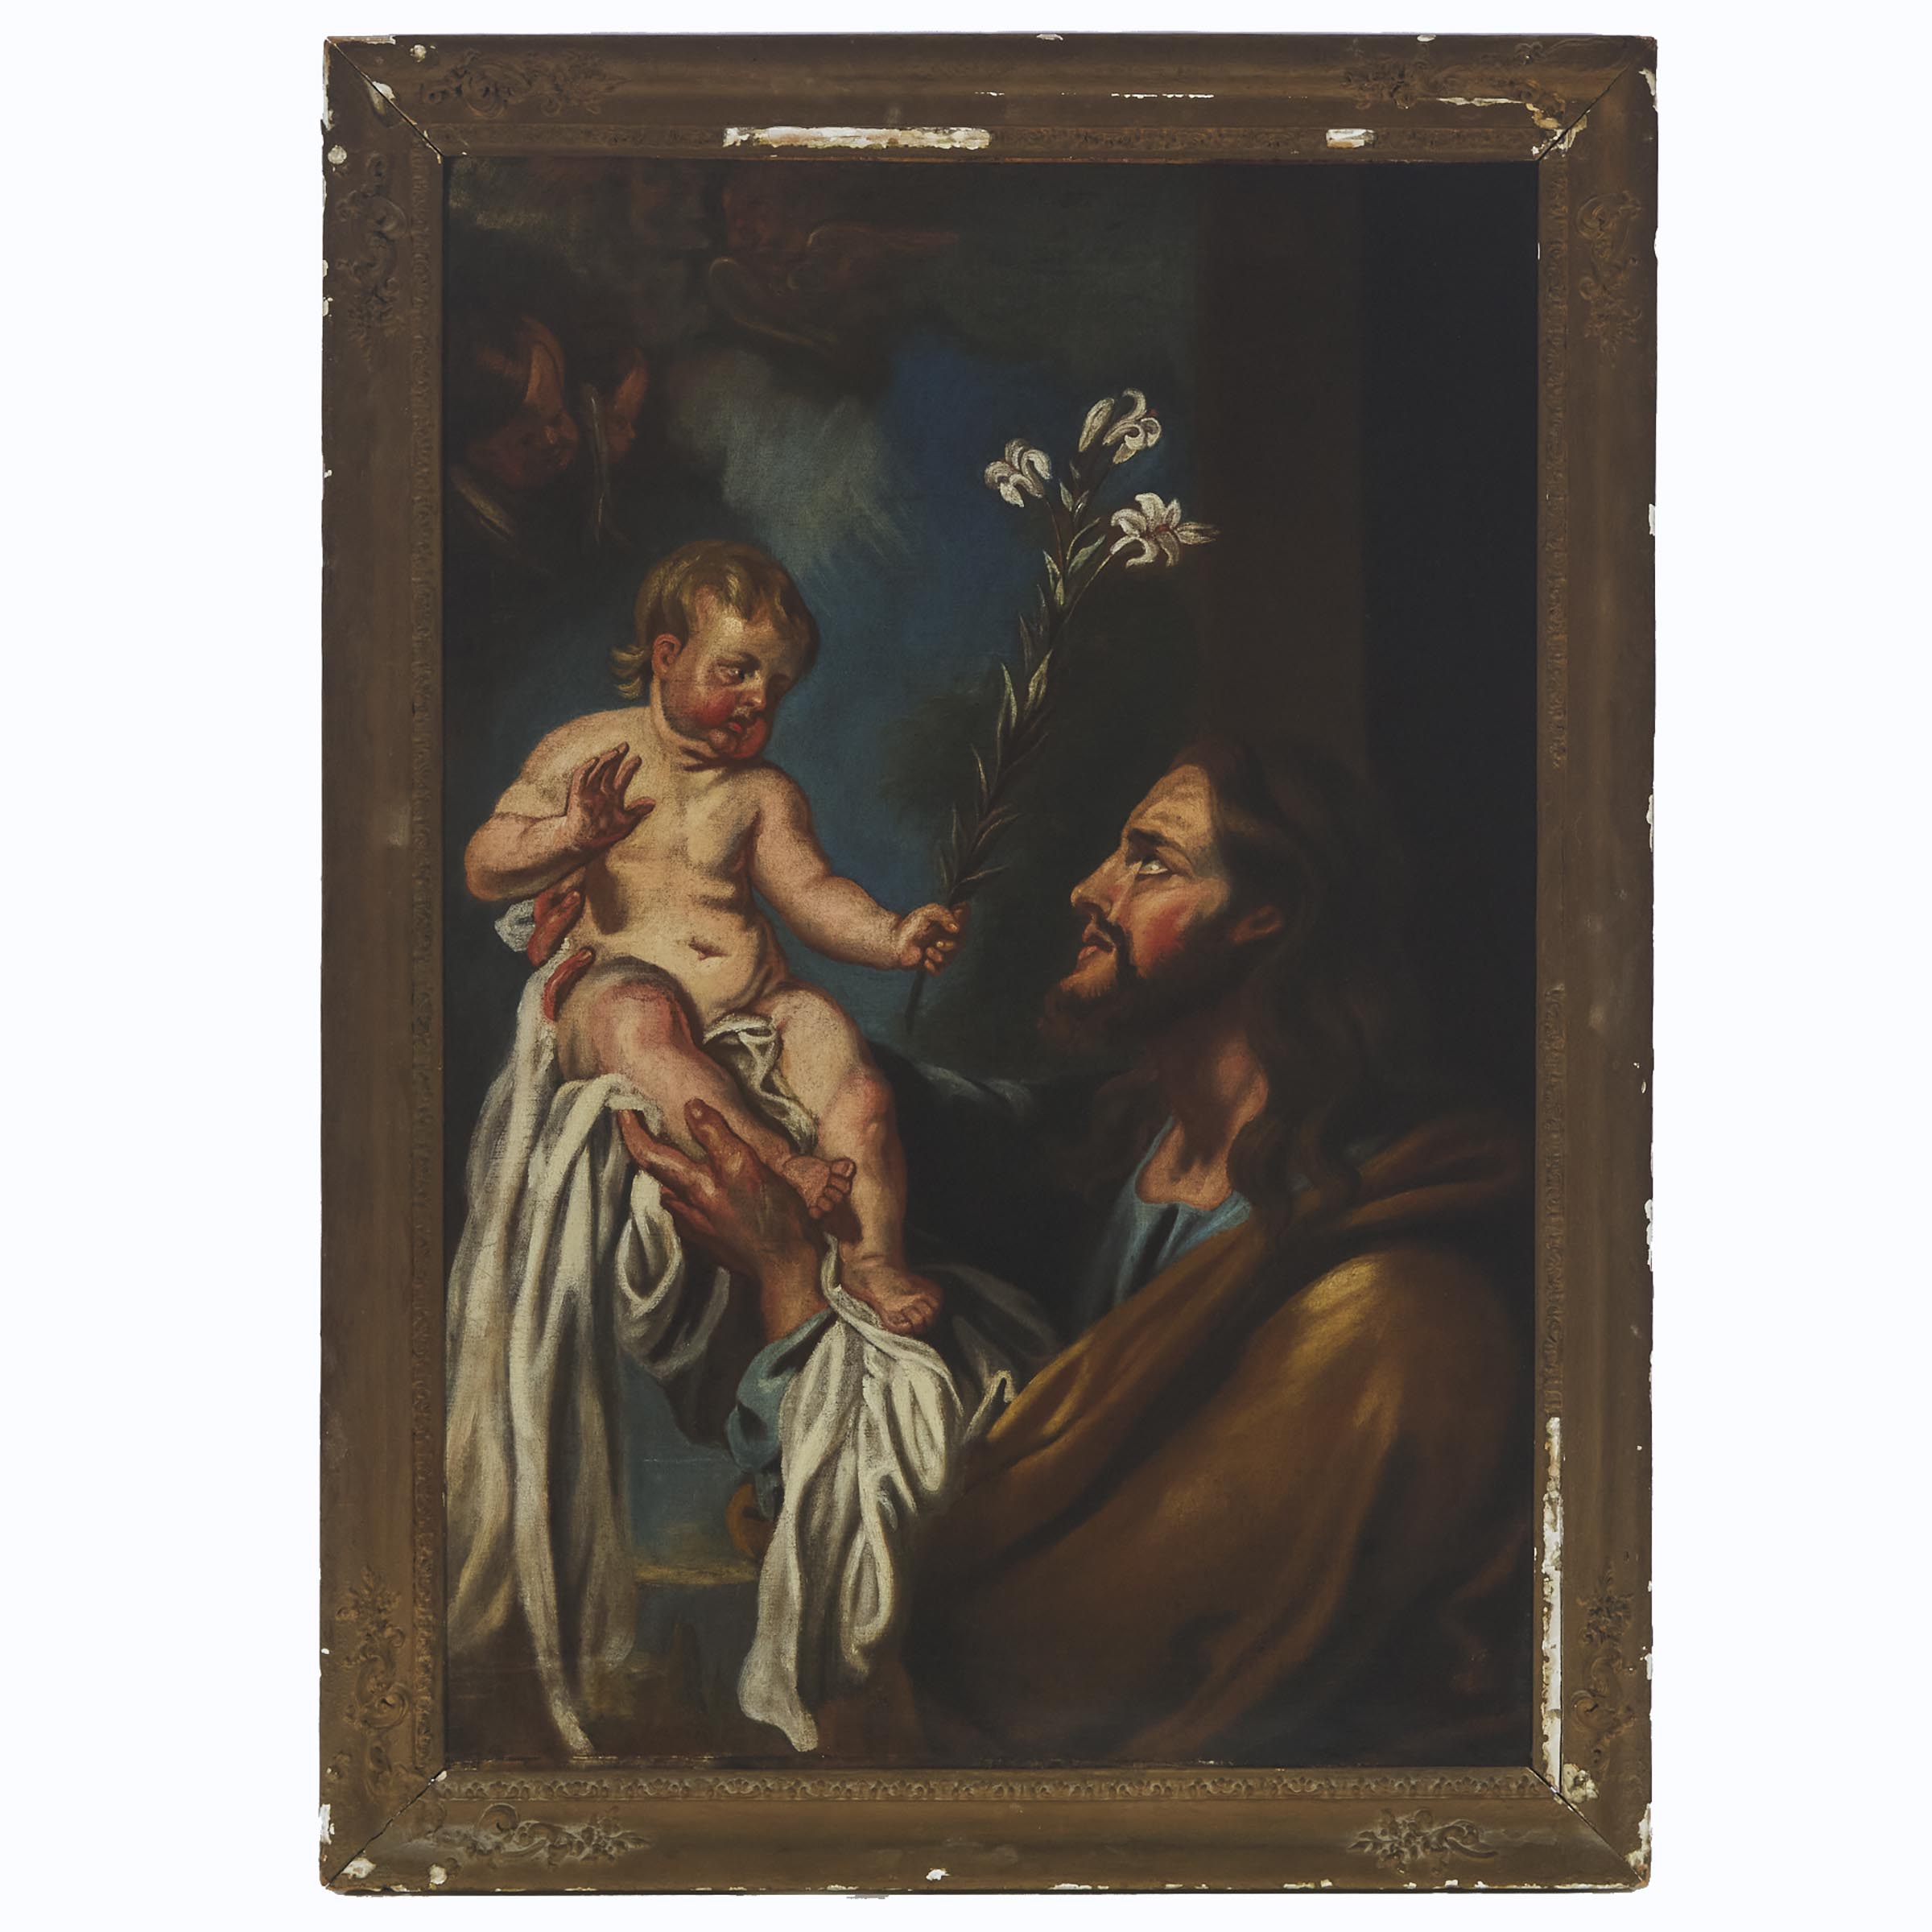 Manner of Peter Paul Rubens (1577-1640)